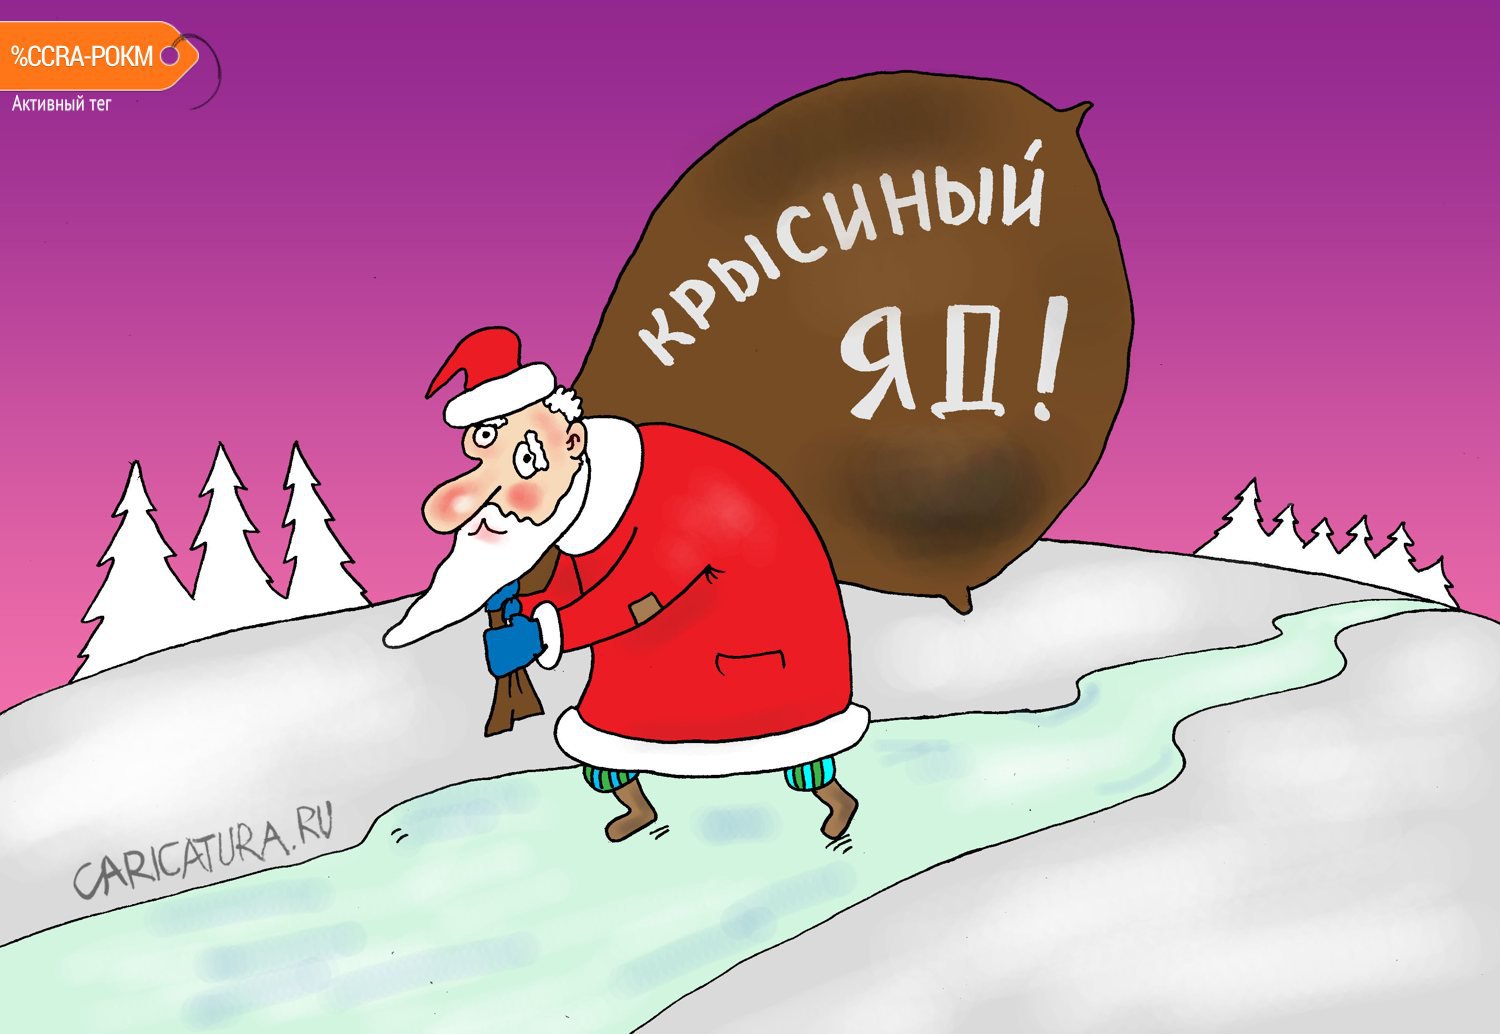 Карикатура "Хит сезона", Валерий Тарасенко